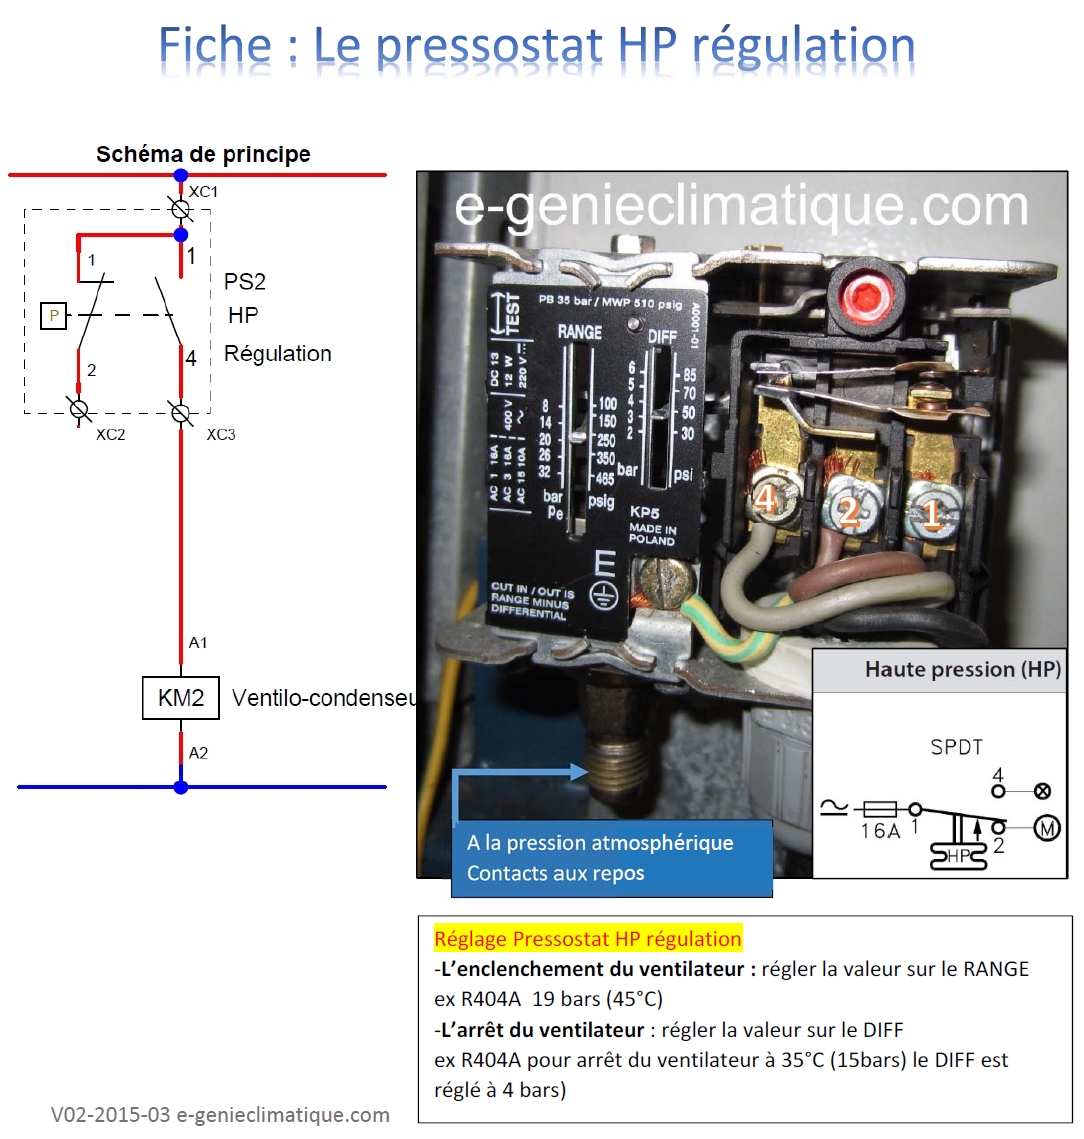 FicheV2-Le_pressostat_de_regulation_hp_ventilo_condenseur